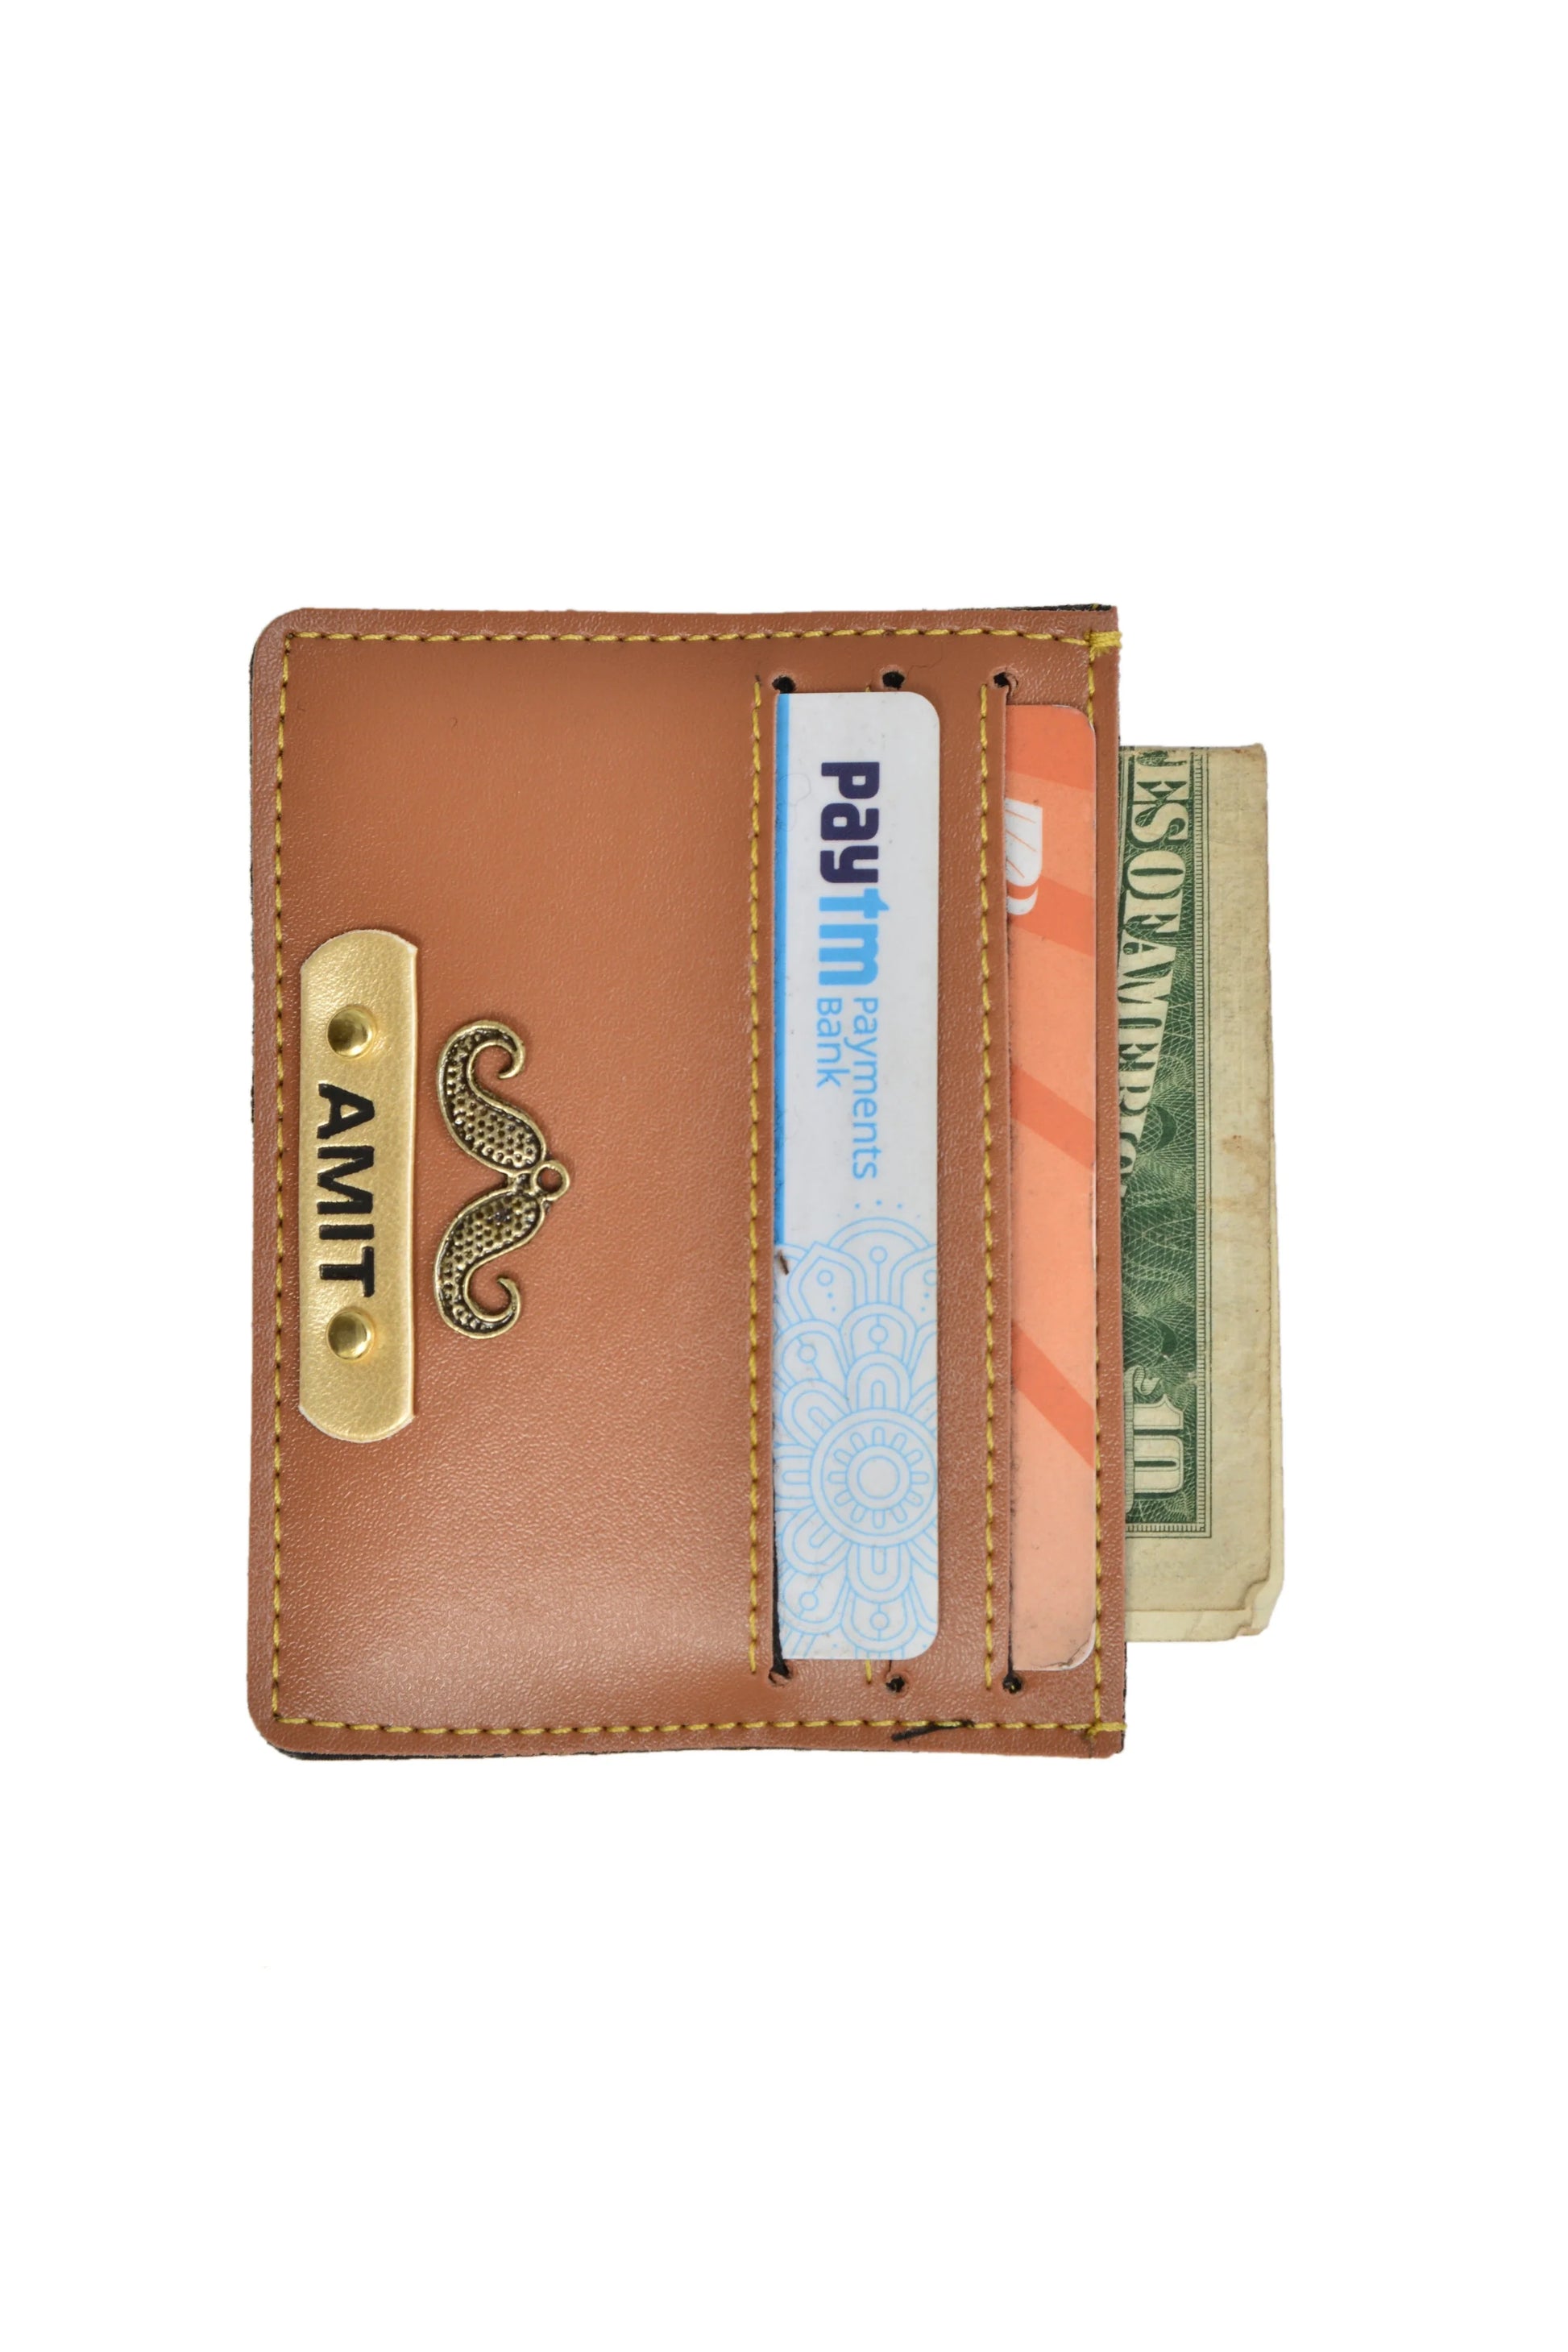 personalized-card-wallet-faux-leather-tan-customized-best-gift-for-boyfriend-girlfriend